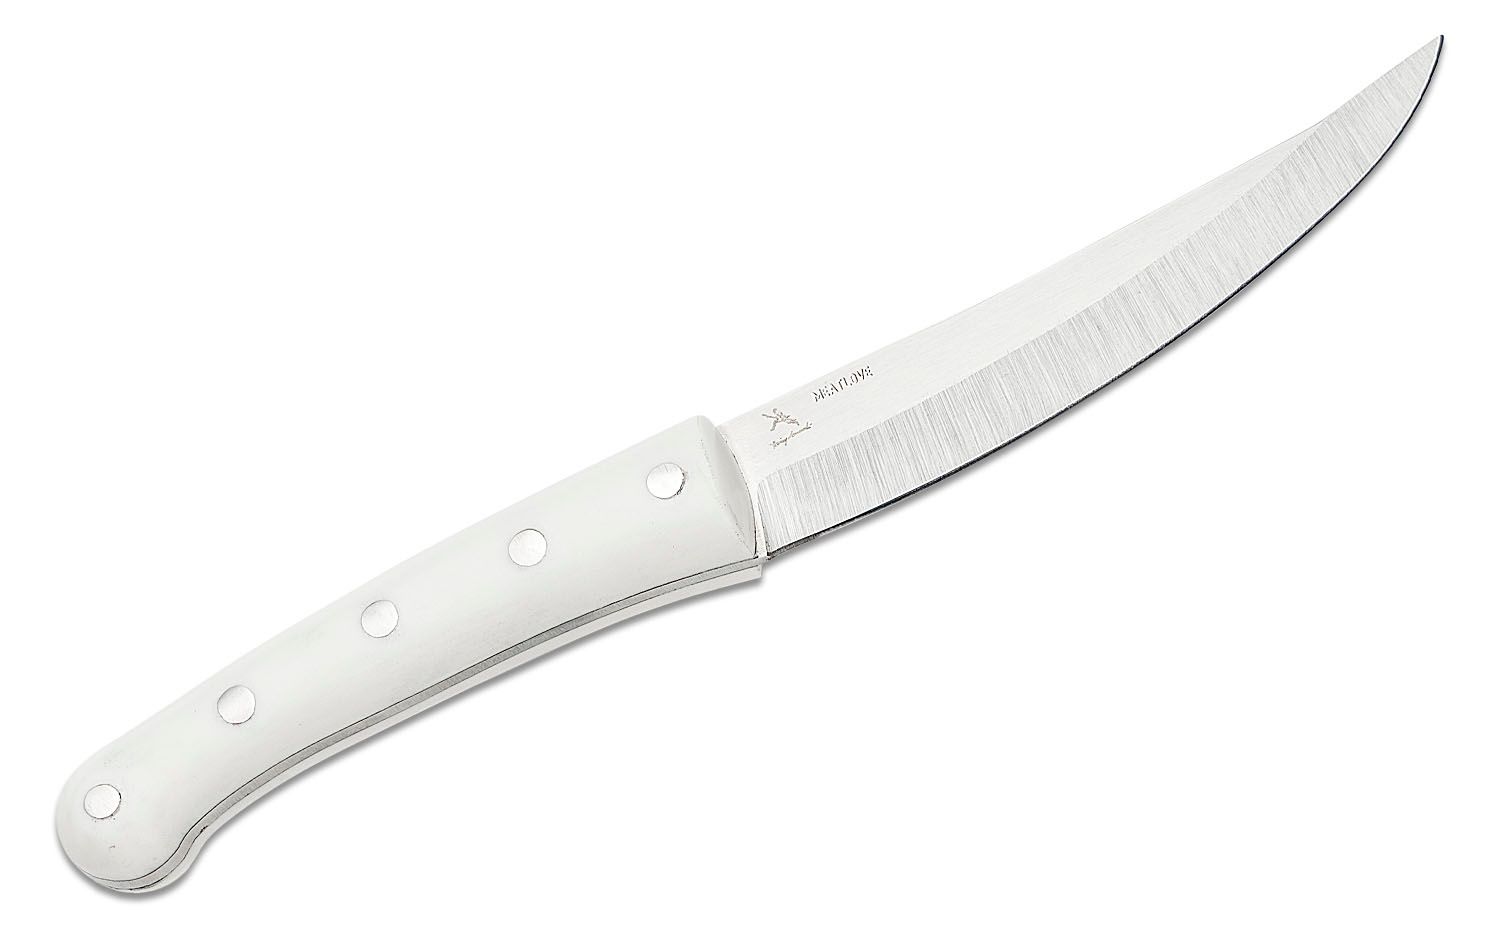 Condor Tool & Knife CTK5007-6.0HC Ulu Knife 6 Blasted Satin Blade, Walnut  Wood Handles, Welted Leather Sheath - KnifeCenter